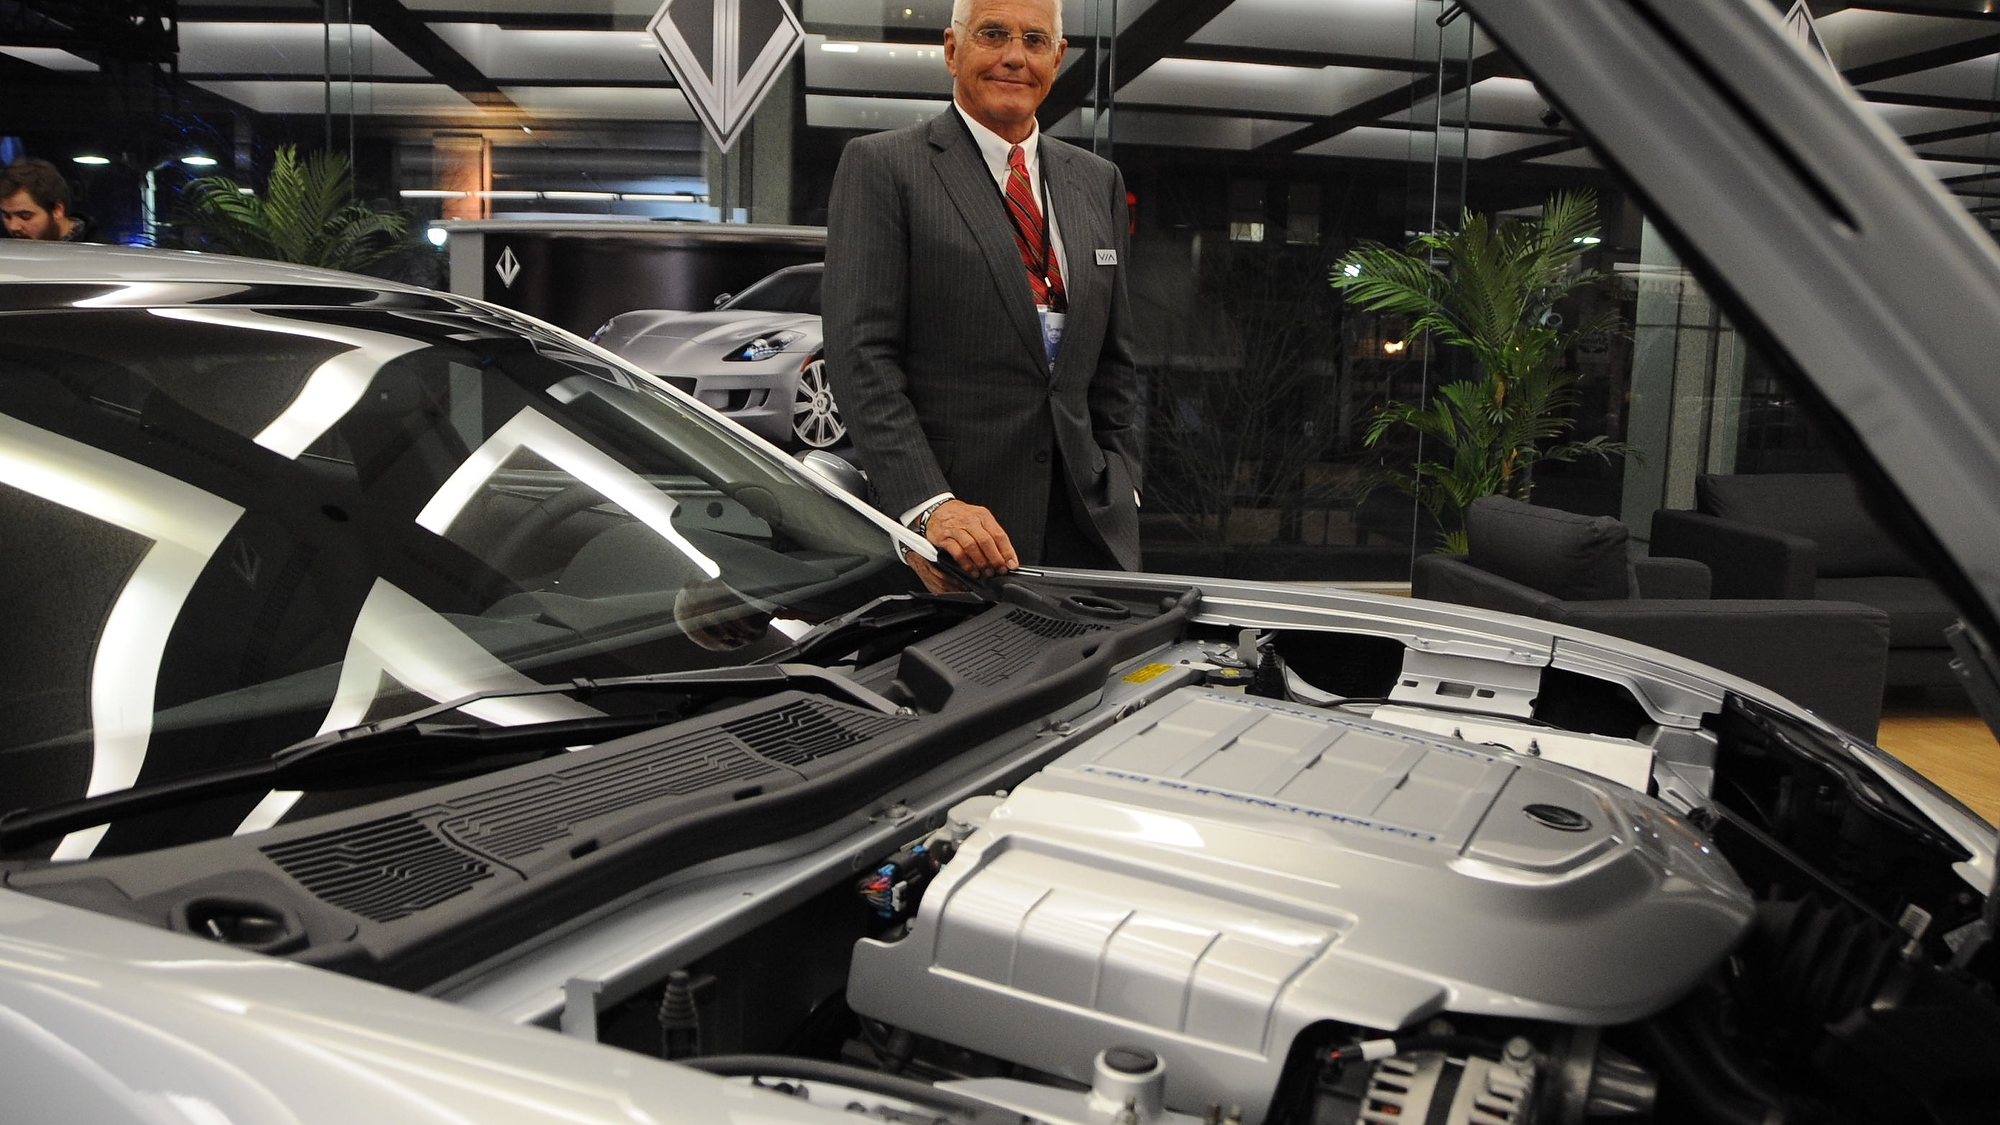 VL Automotive Destino with Bob Lutz at 2013 Detroit Auto Show